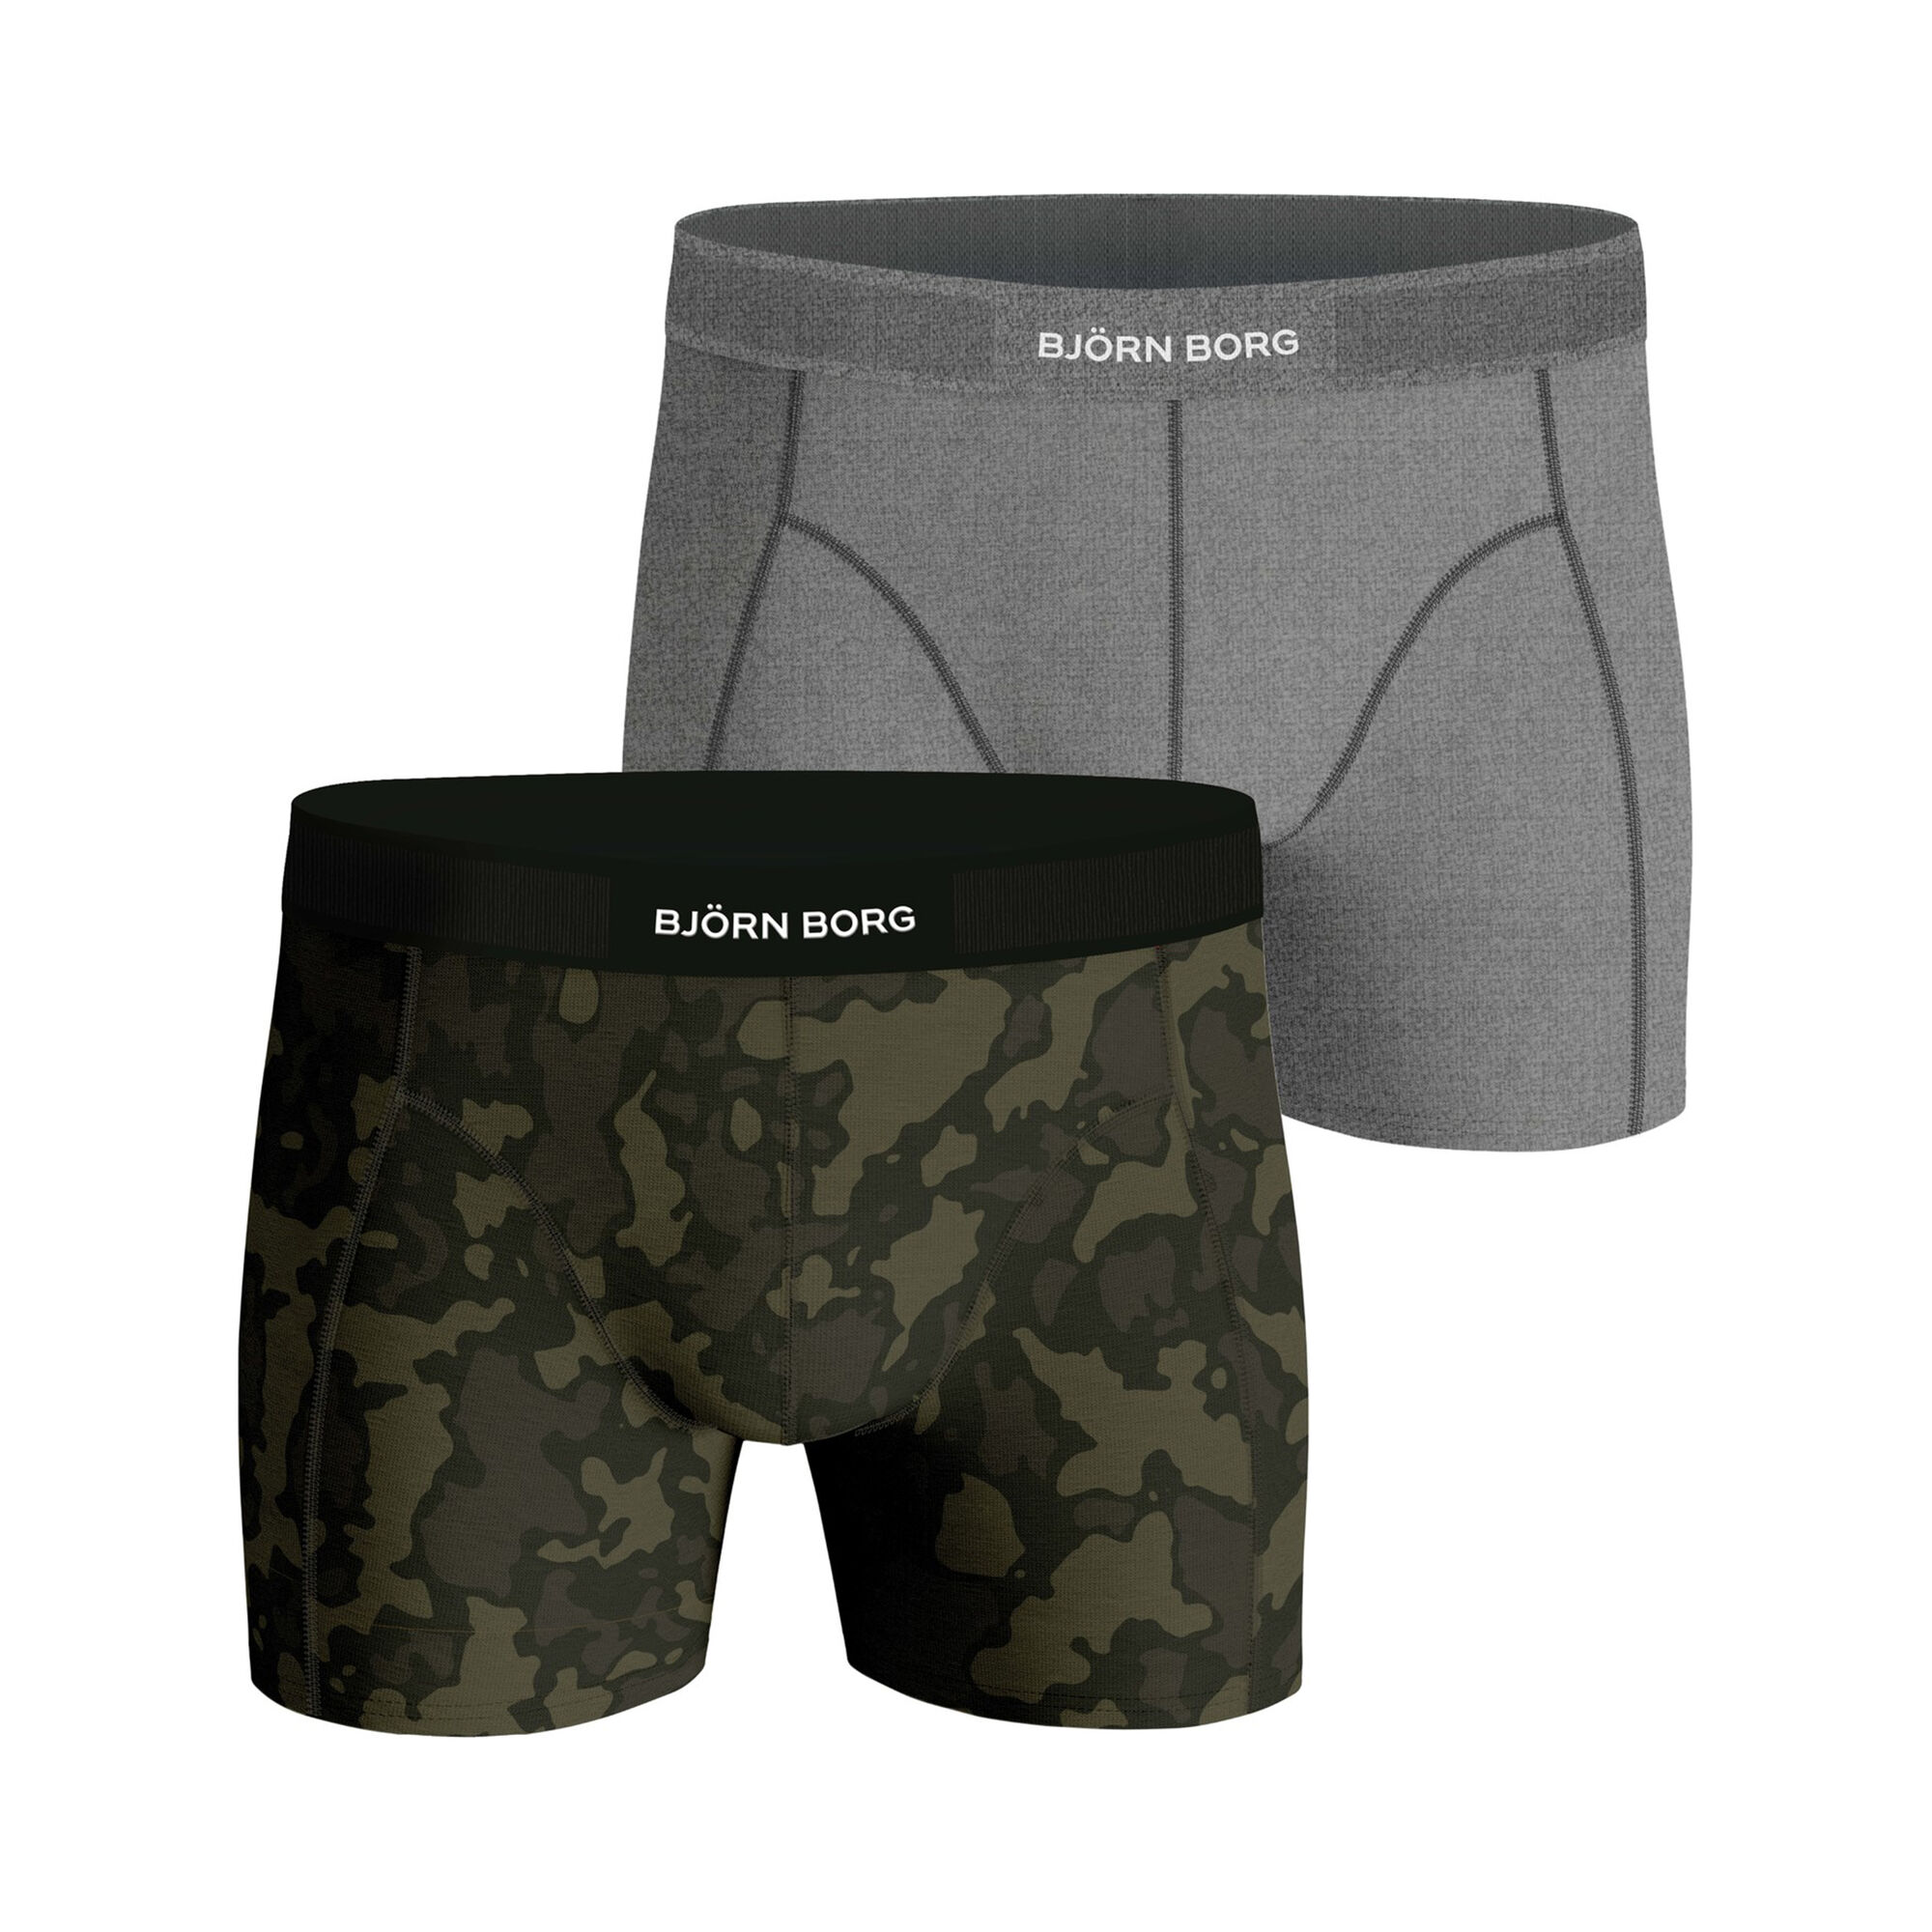 pen val trui buy Björn Borg Premium Cotton Stretch Boxer Shorts 2 Pack Men - Grey, Khaki  online | Tennis-Point